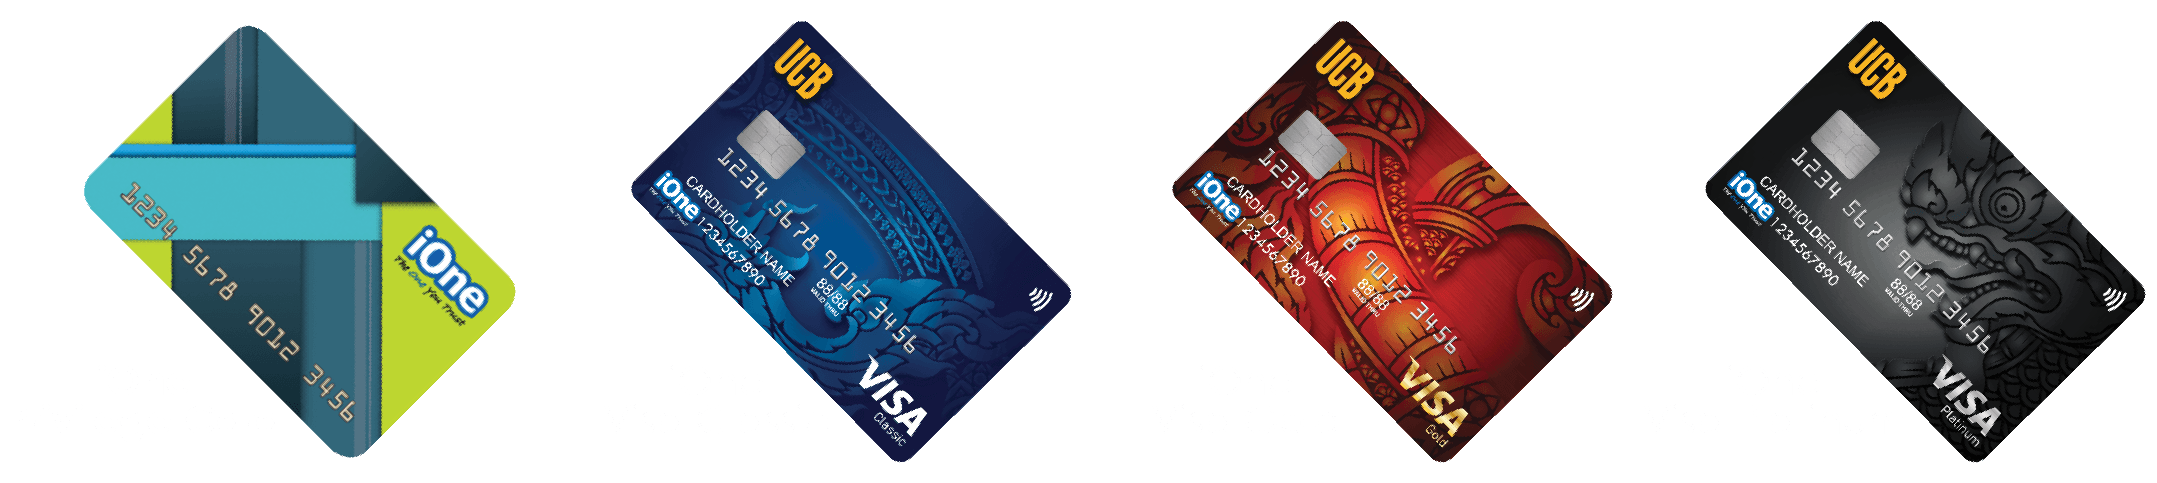 iOne Visa Card